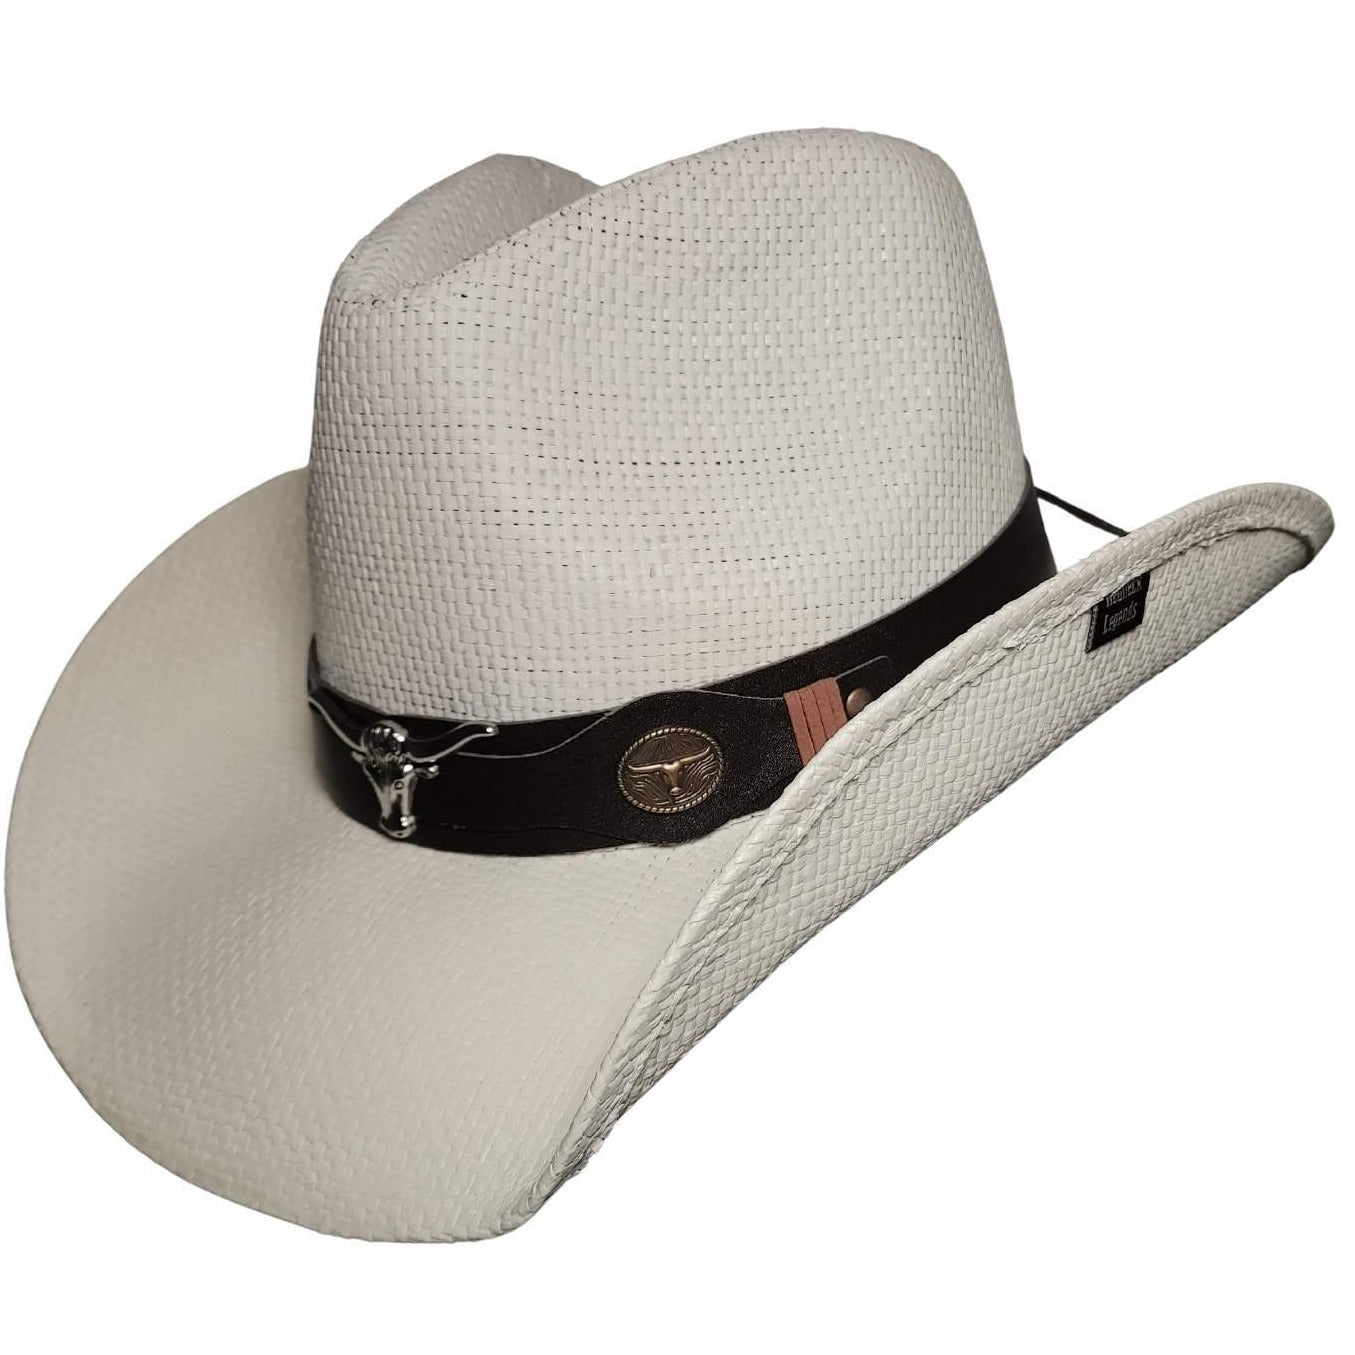 White Bull Cowboy Hat